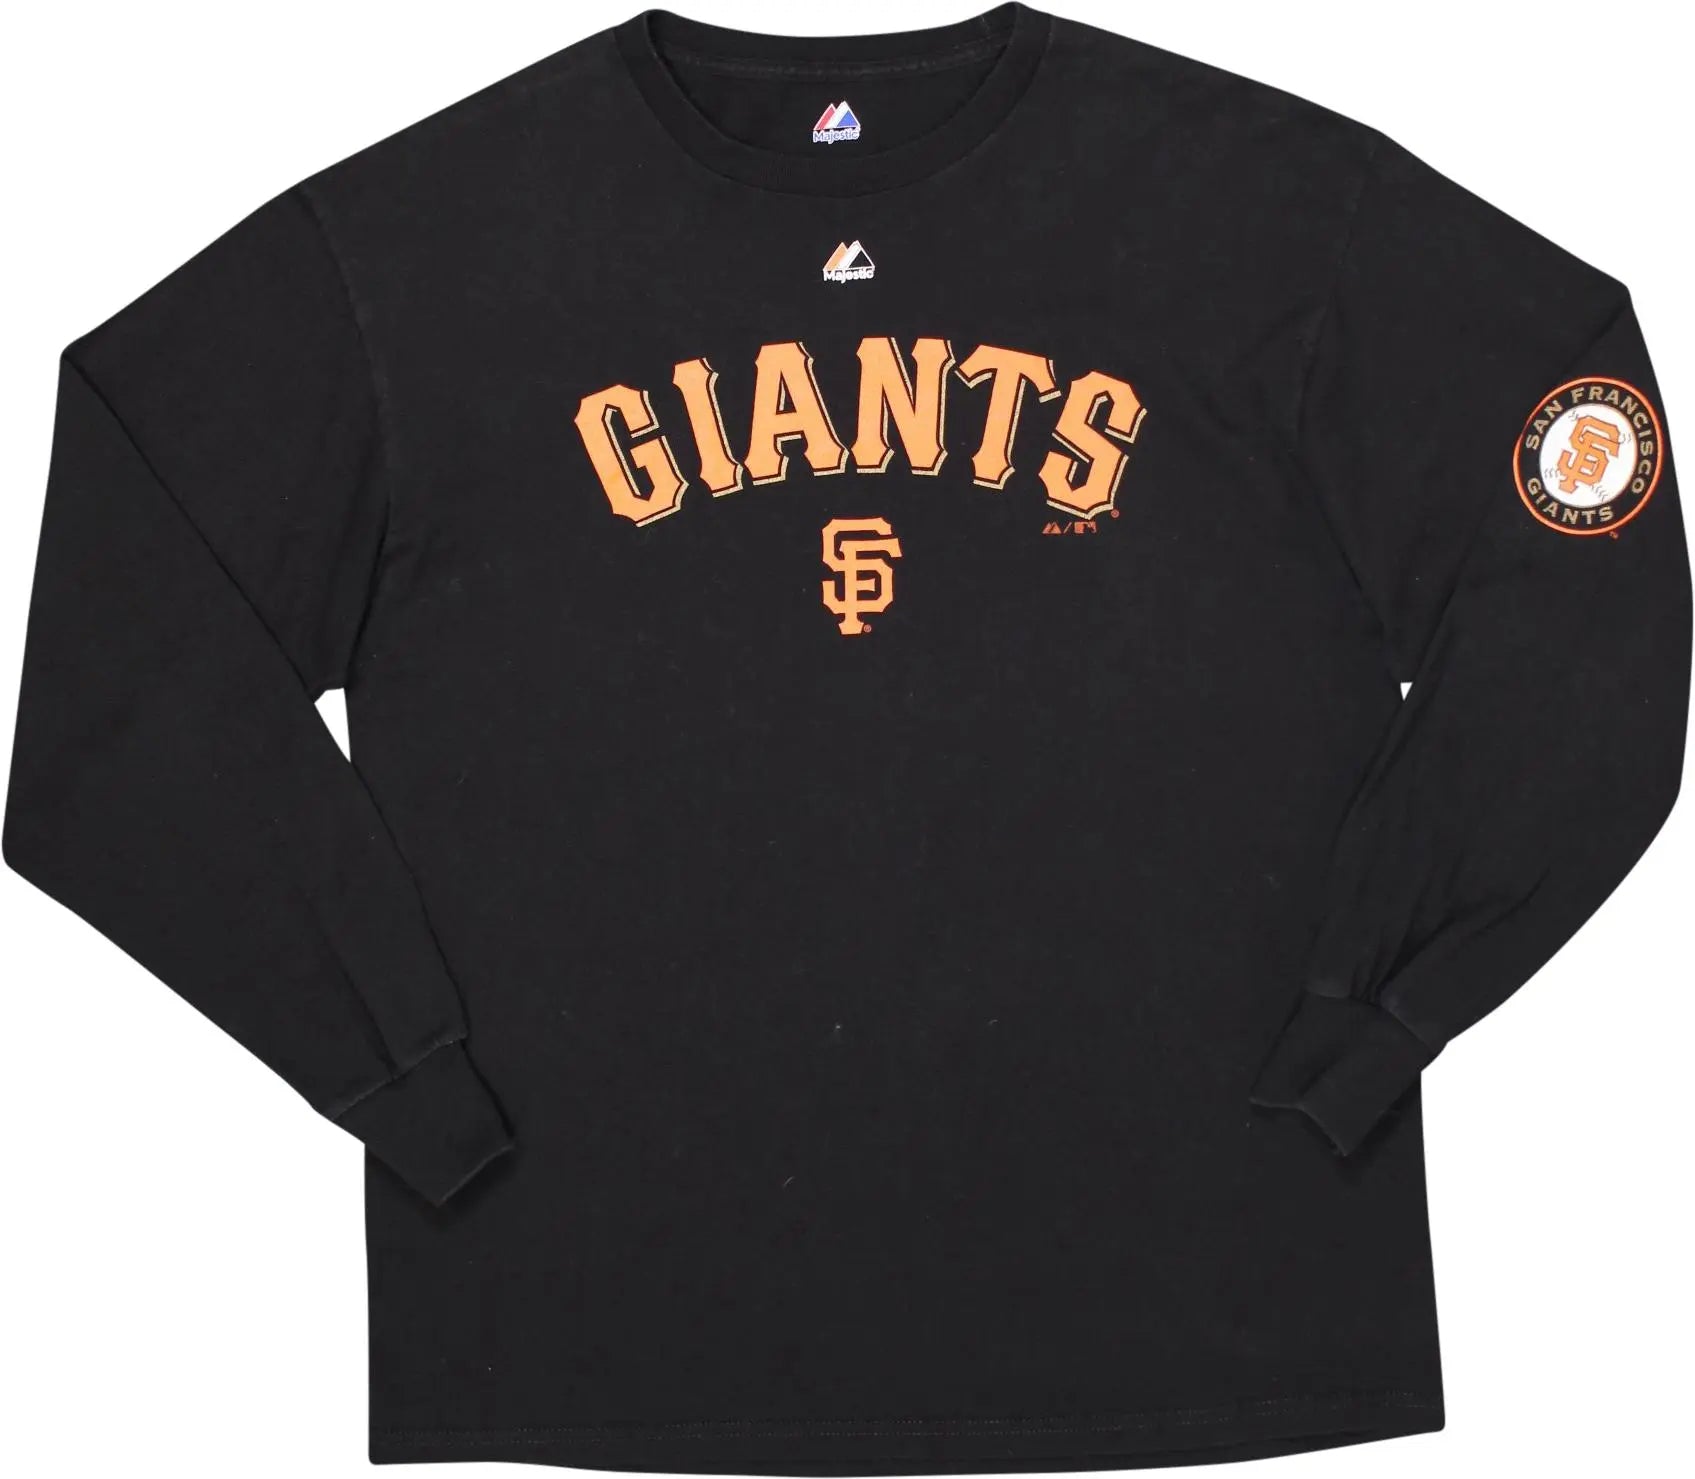 Majestic - Giants Crewneck Sweatshirt- ThriftTale.com - Vintage and second handclothing